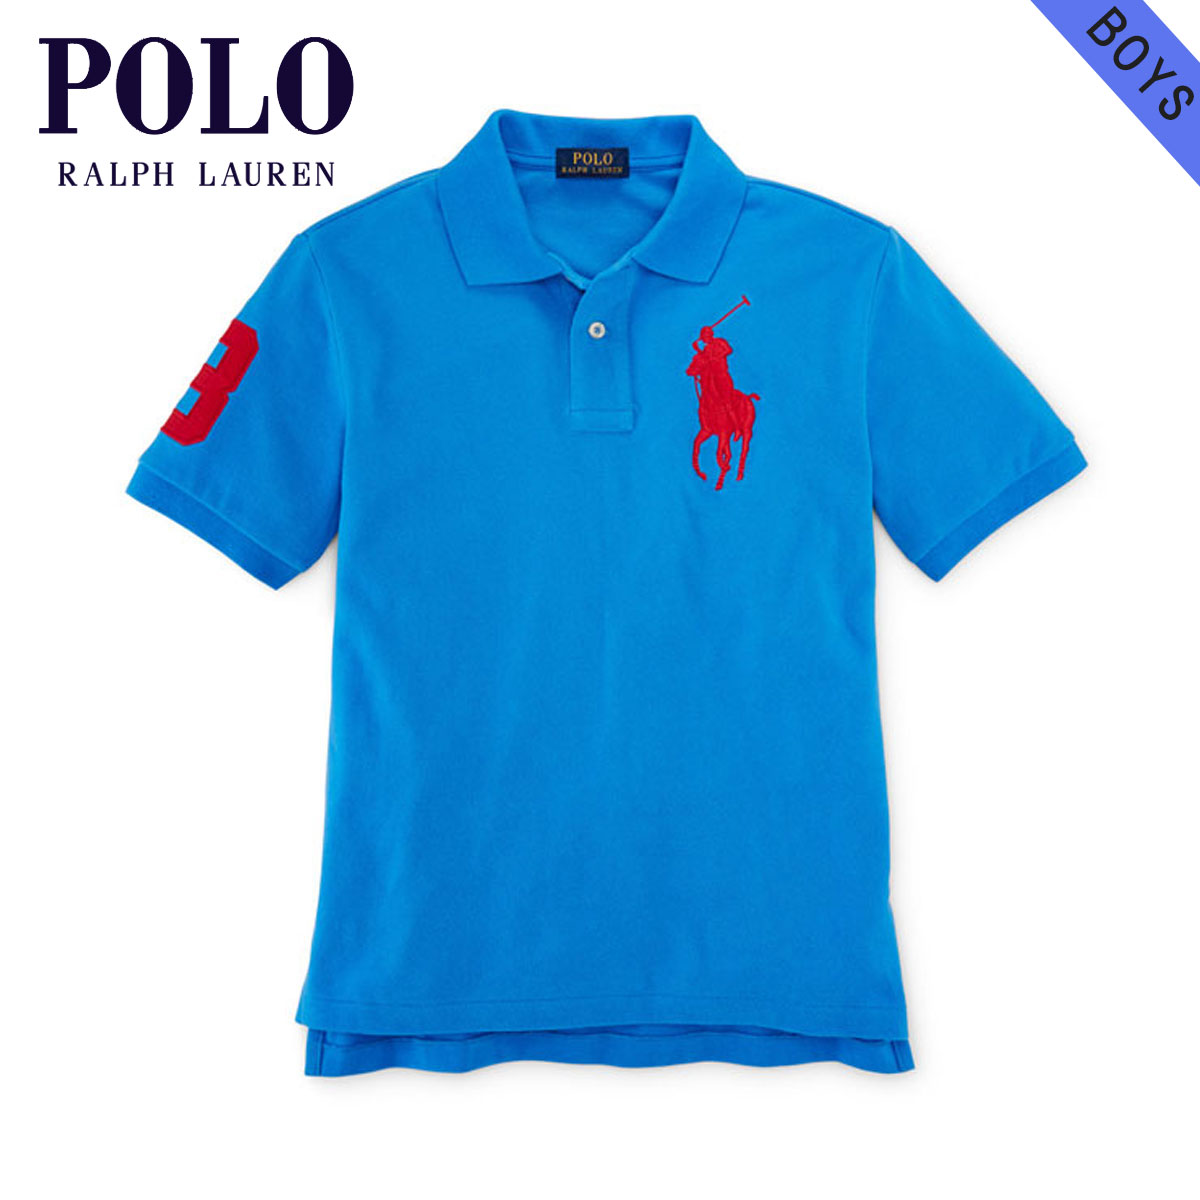 childrens polo ralph lauren shirts